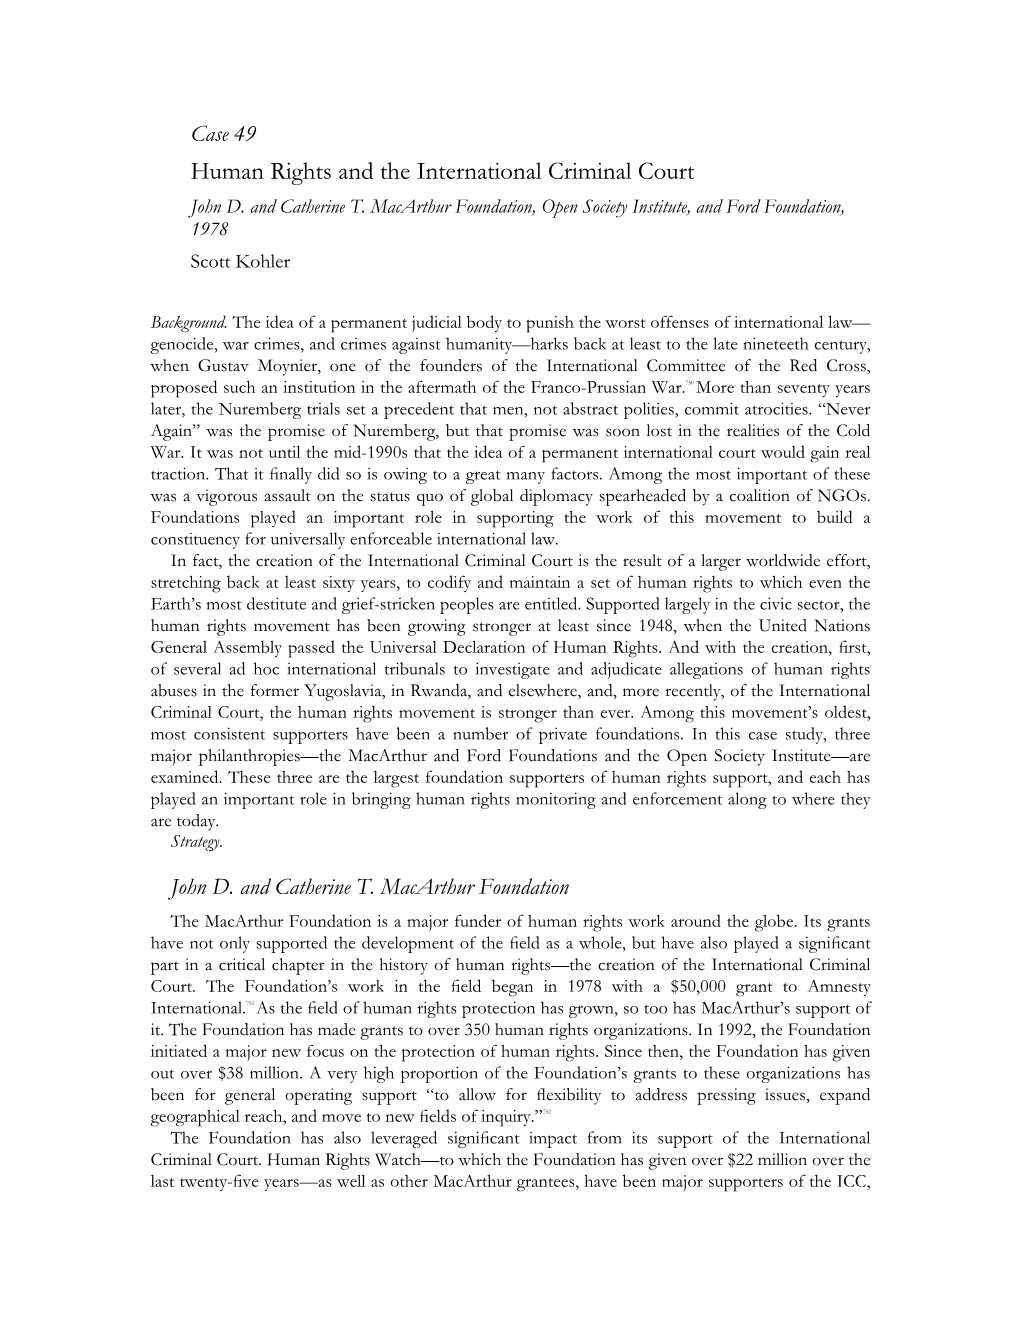 Human Rights and the International Criminal Court John D